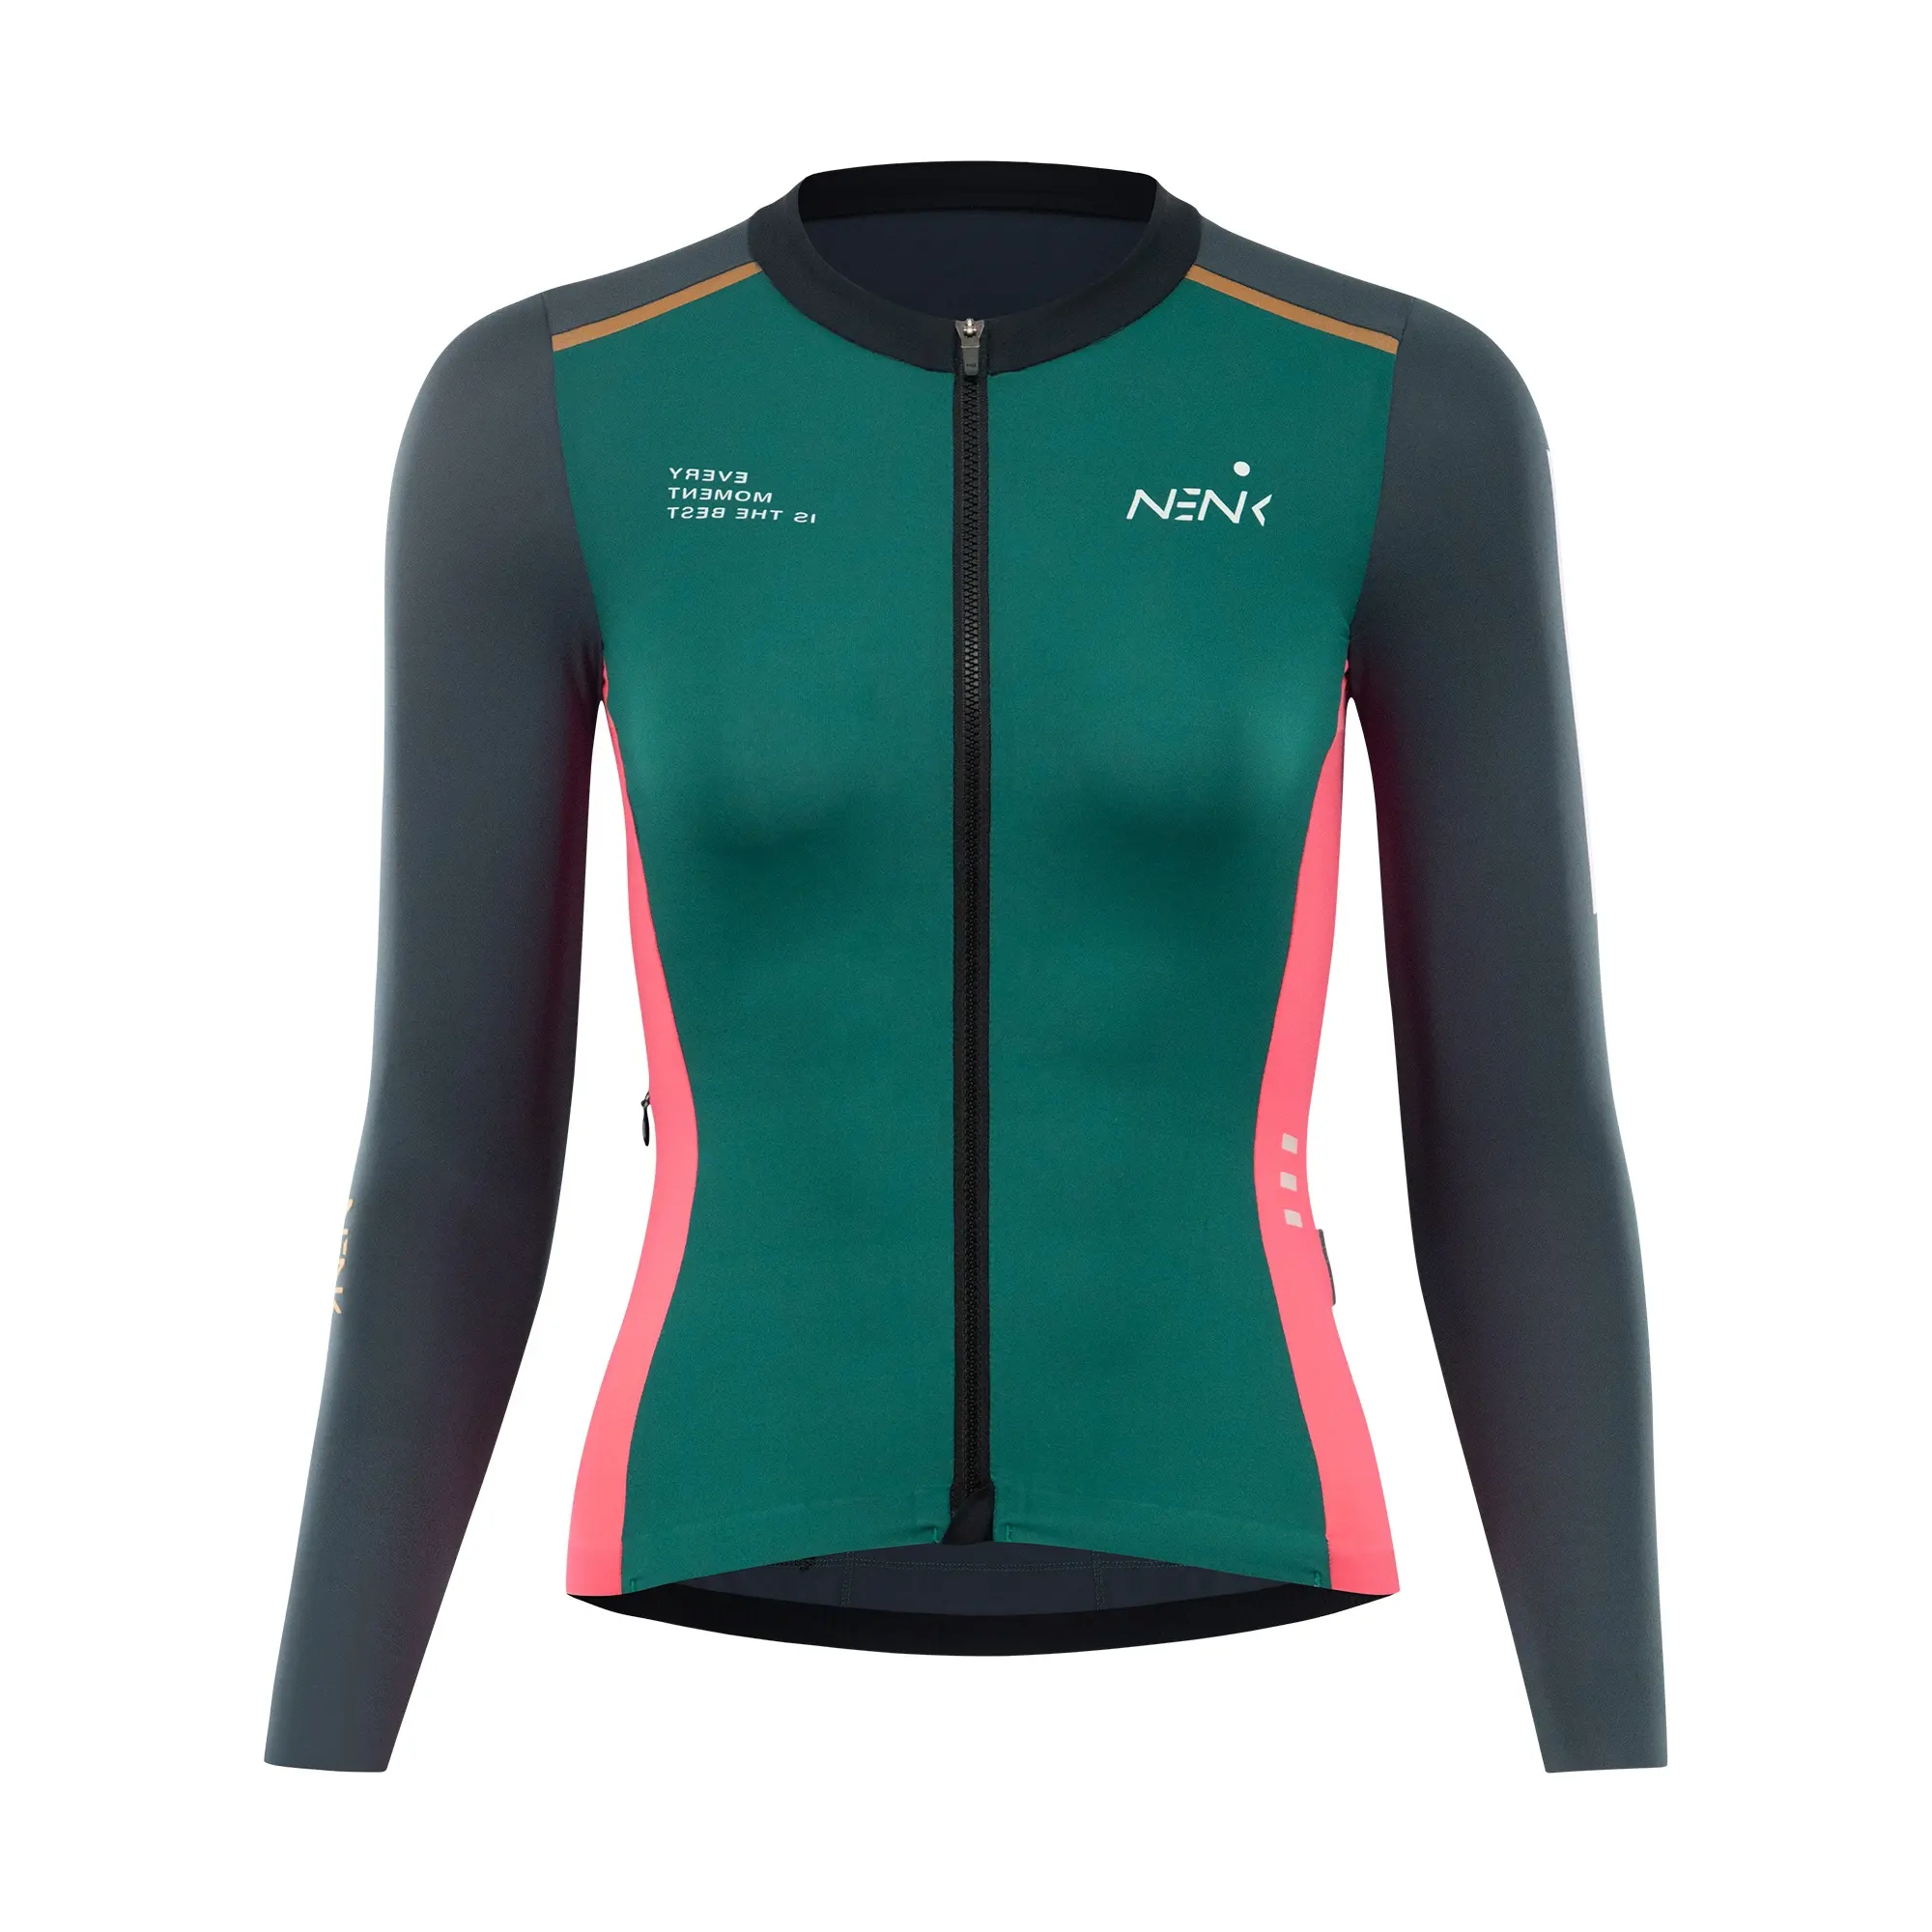 OEM ODM personalizado Aero Racing ciclismo Jersey manga larga liquen verde carretera bicicleta camisa hombres mujeres para parejas con etiqueta privada